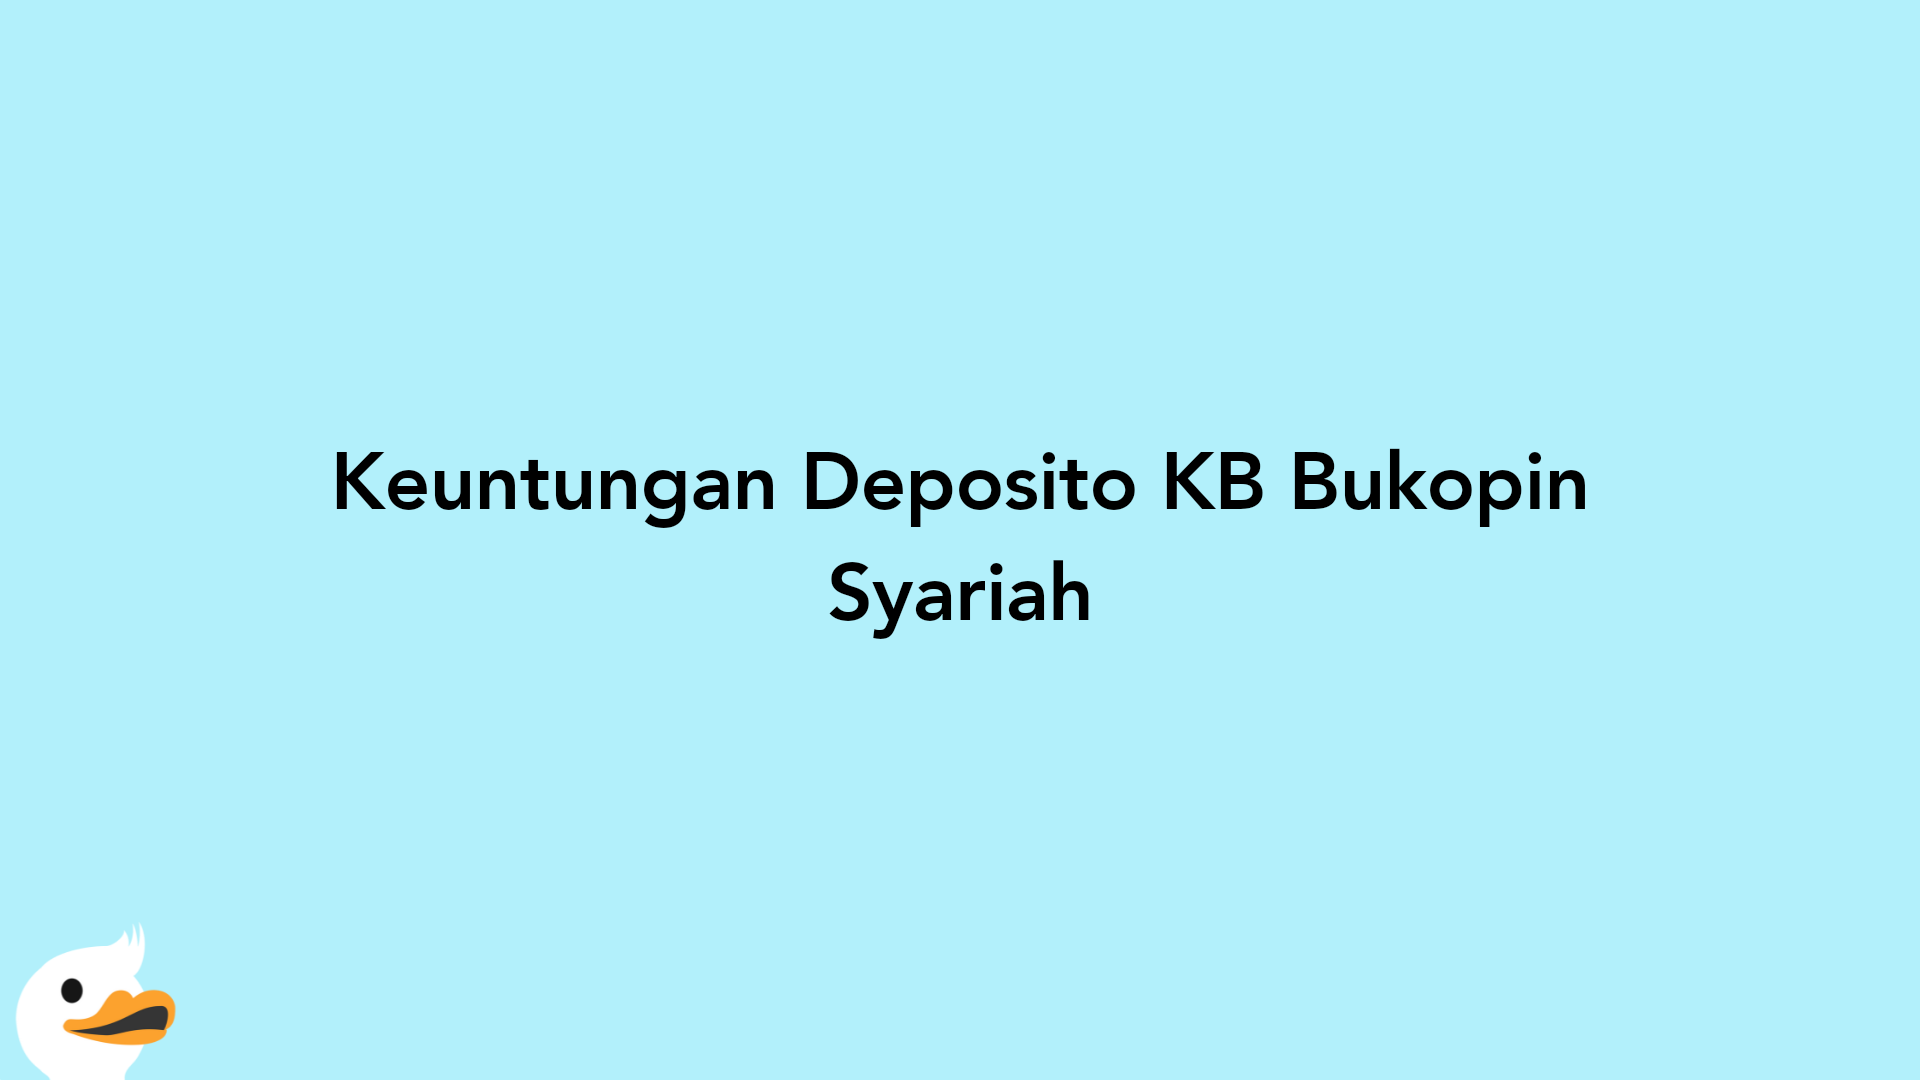 Keuntungan Deposito KB Bukopin Syariah